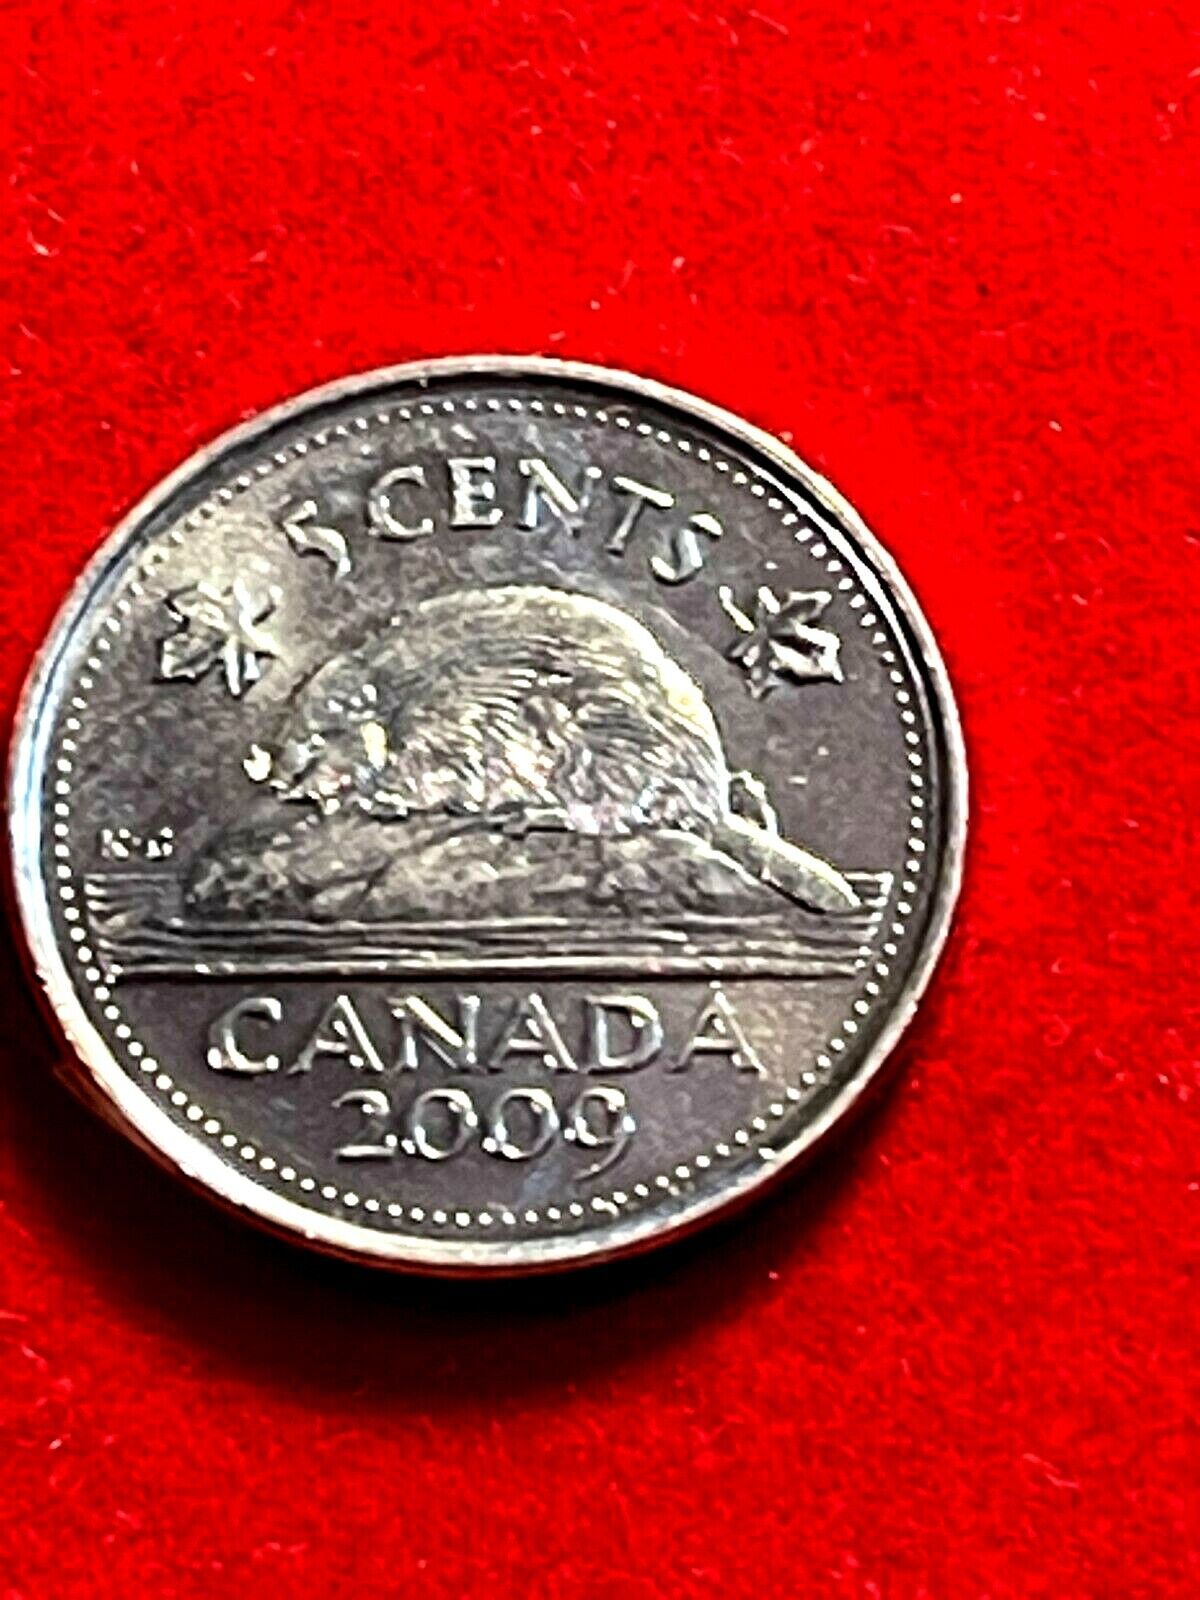 Canada 2009 Nickel, Canadian Mint 5 Cents Coin, Circulated, Queen Elizabeth Ii